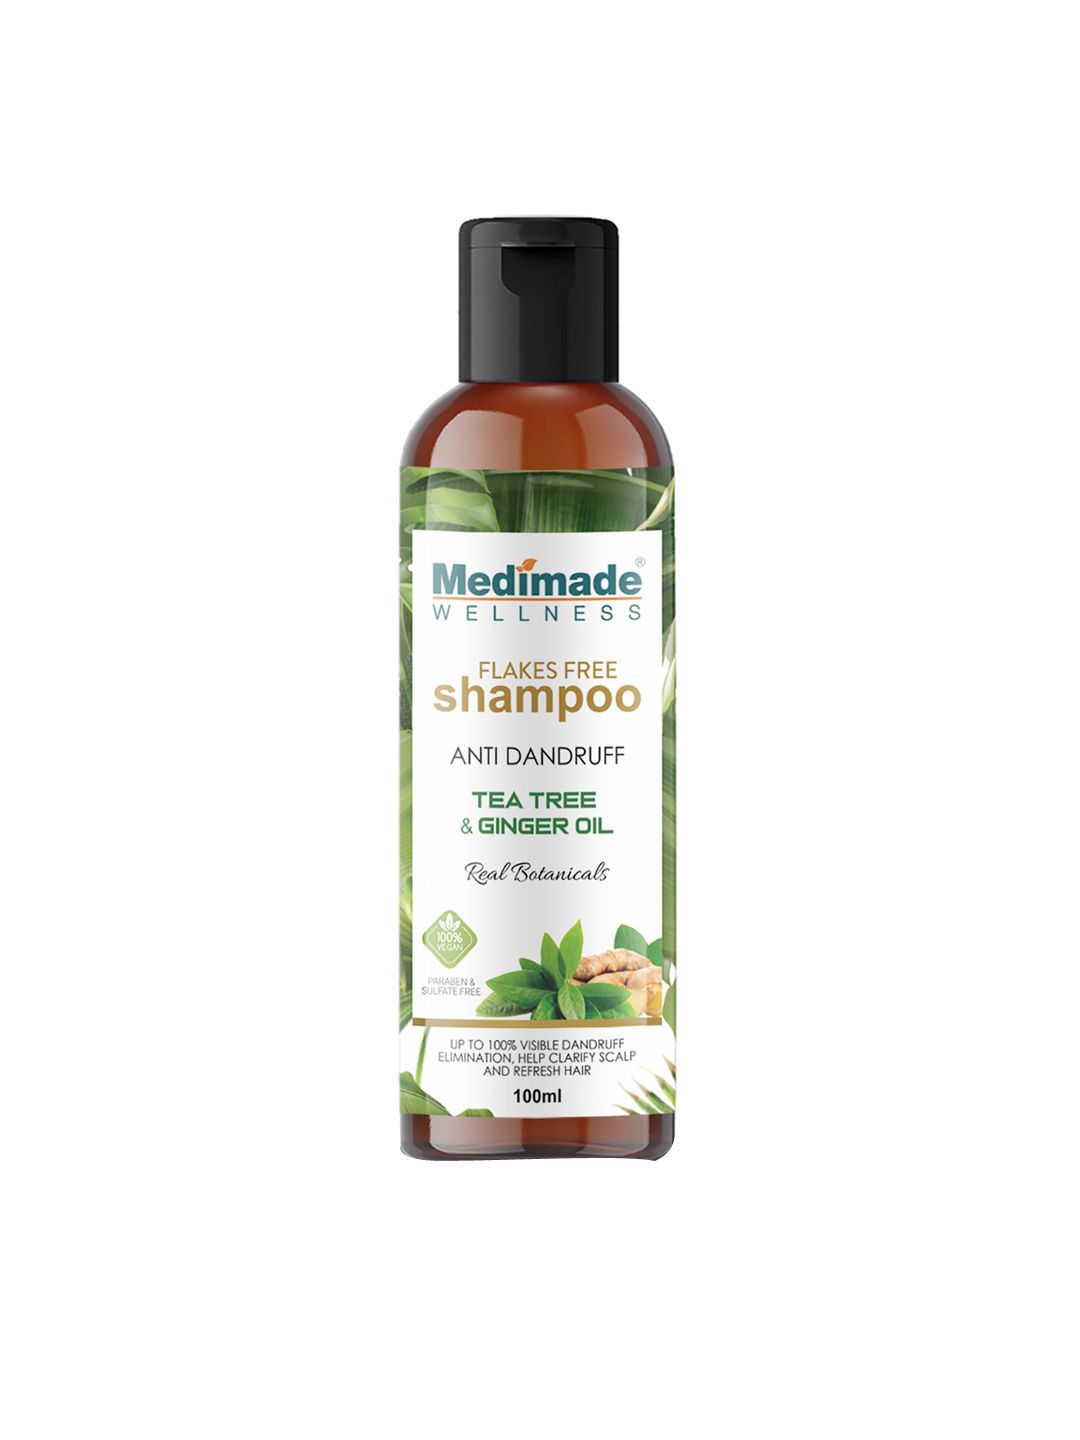 Medimade White Anti Dandruff Shampoo with Tee Tree & Ginger Oil 100ml Price in India